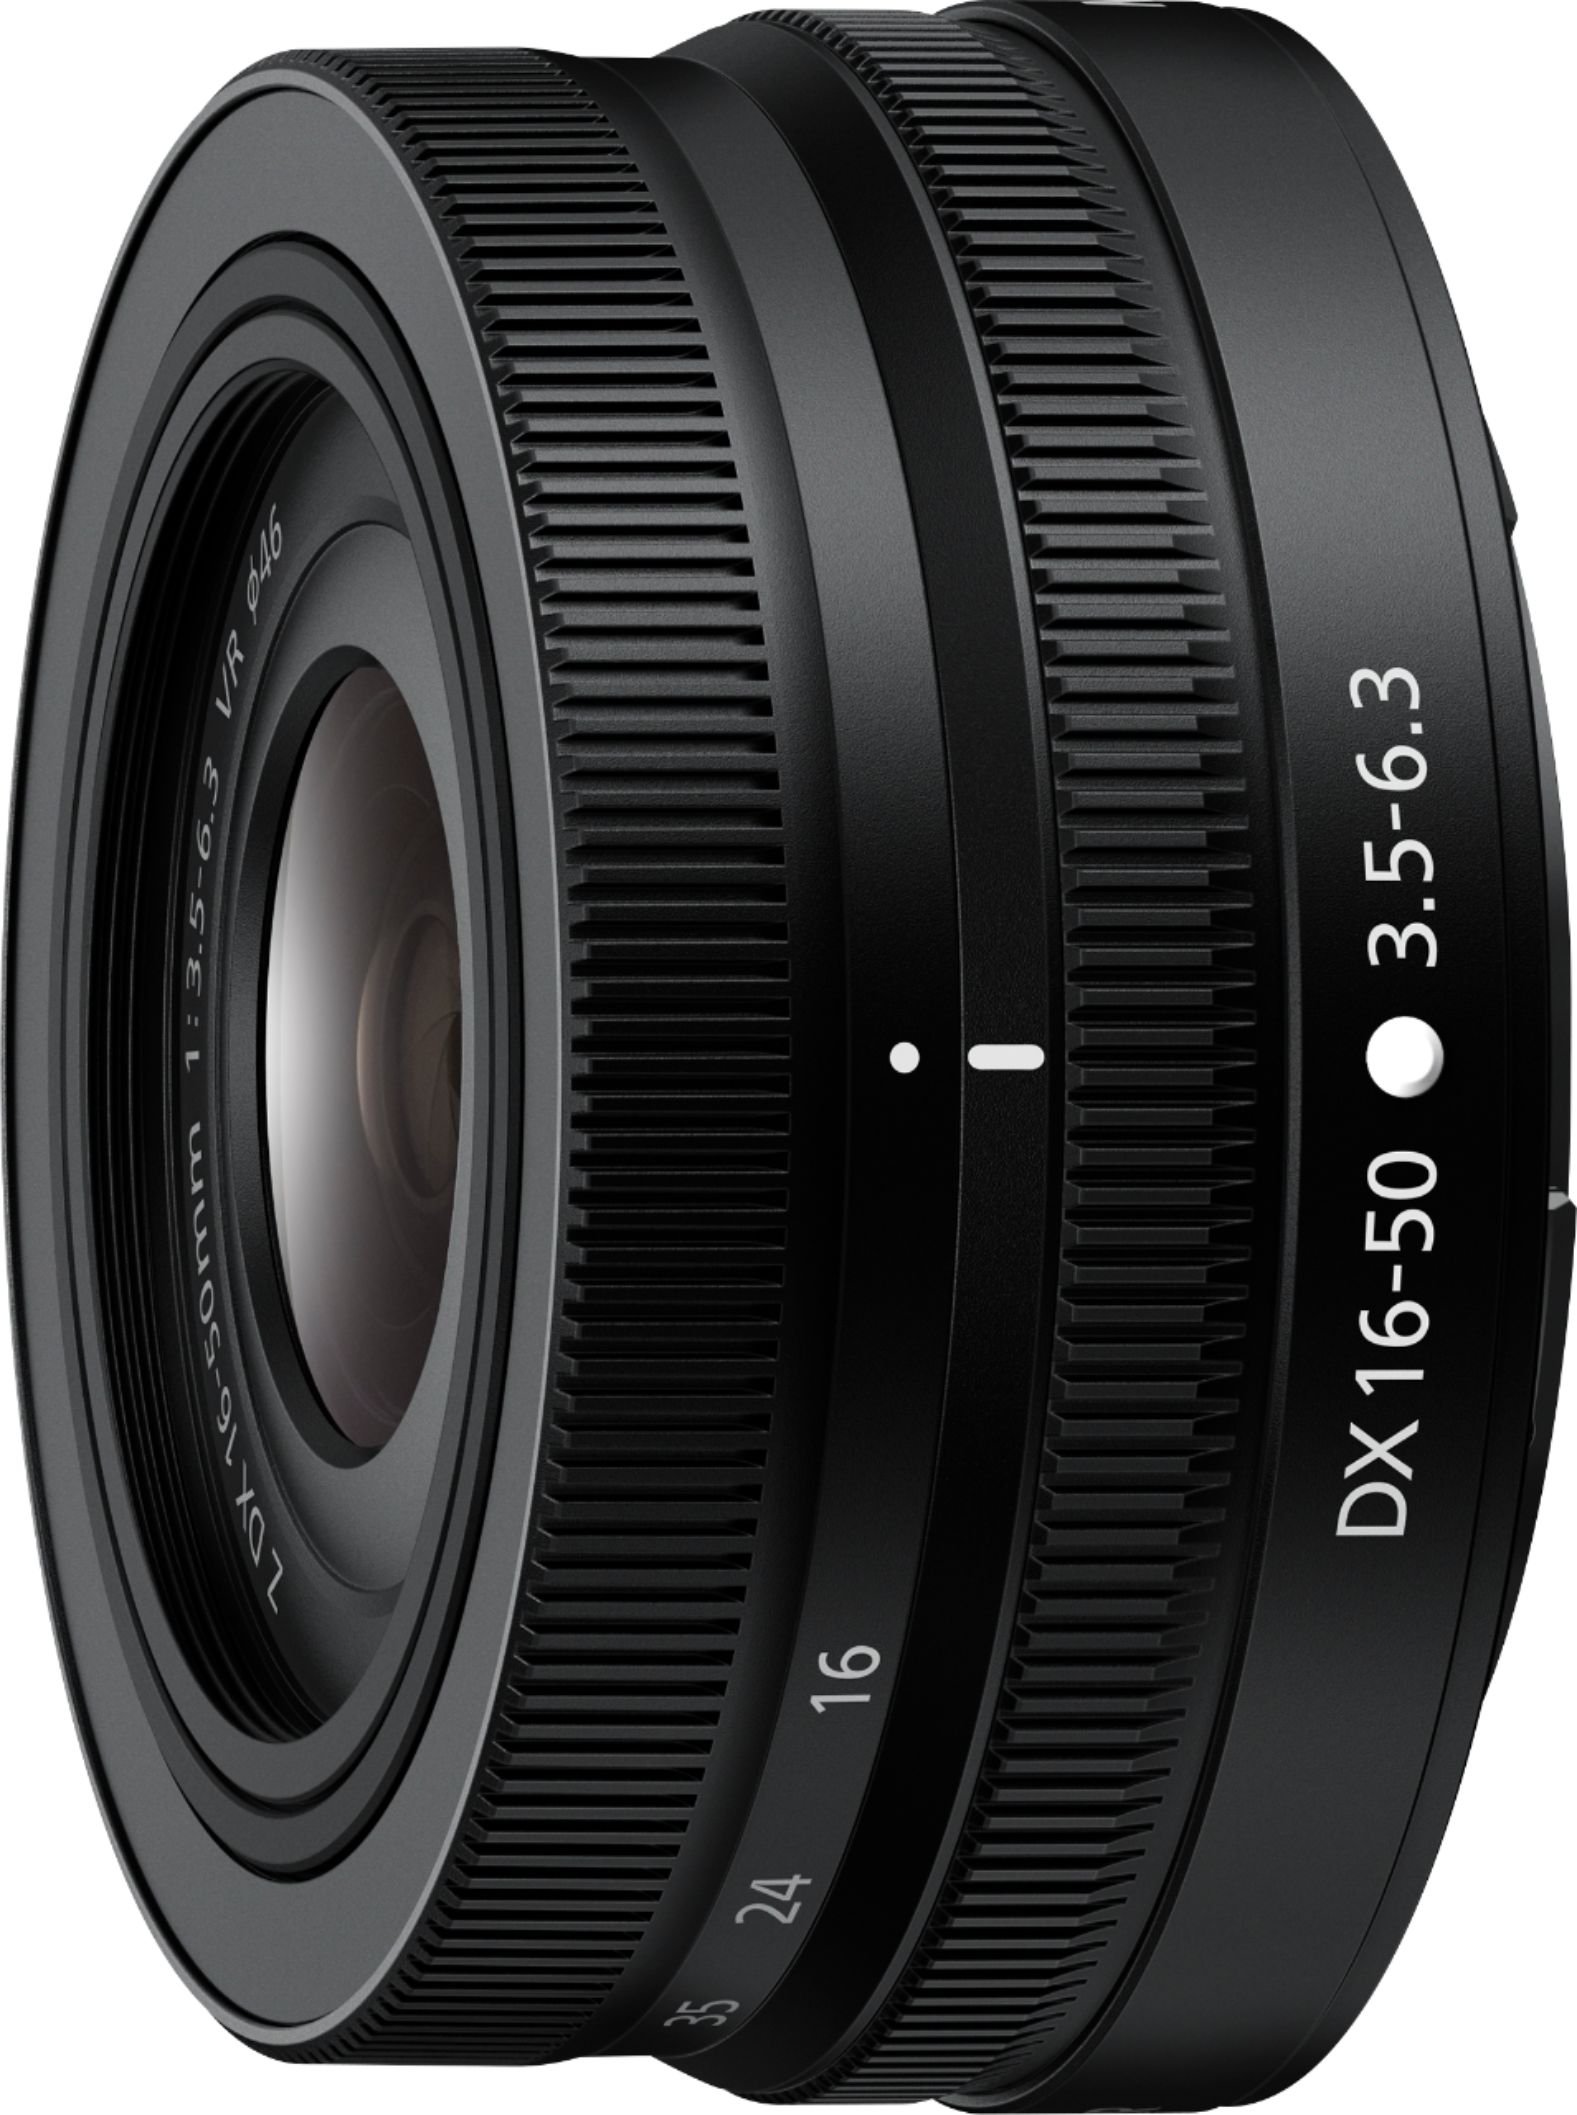 Angle View: NIKKOR Z DX 16-50mm f/3.5-6.3 VR Standard Zoom Lens for Nikon Z Cameras - Black